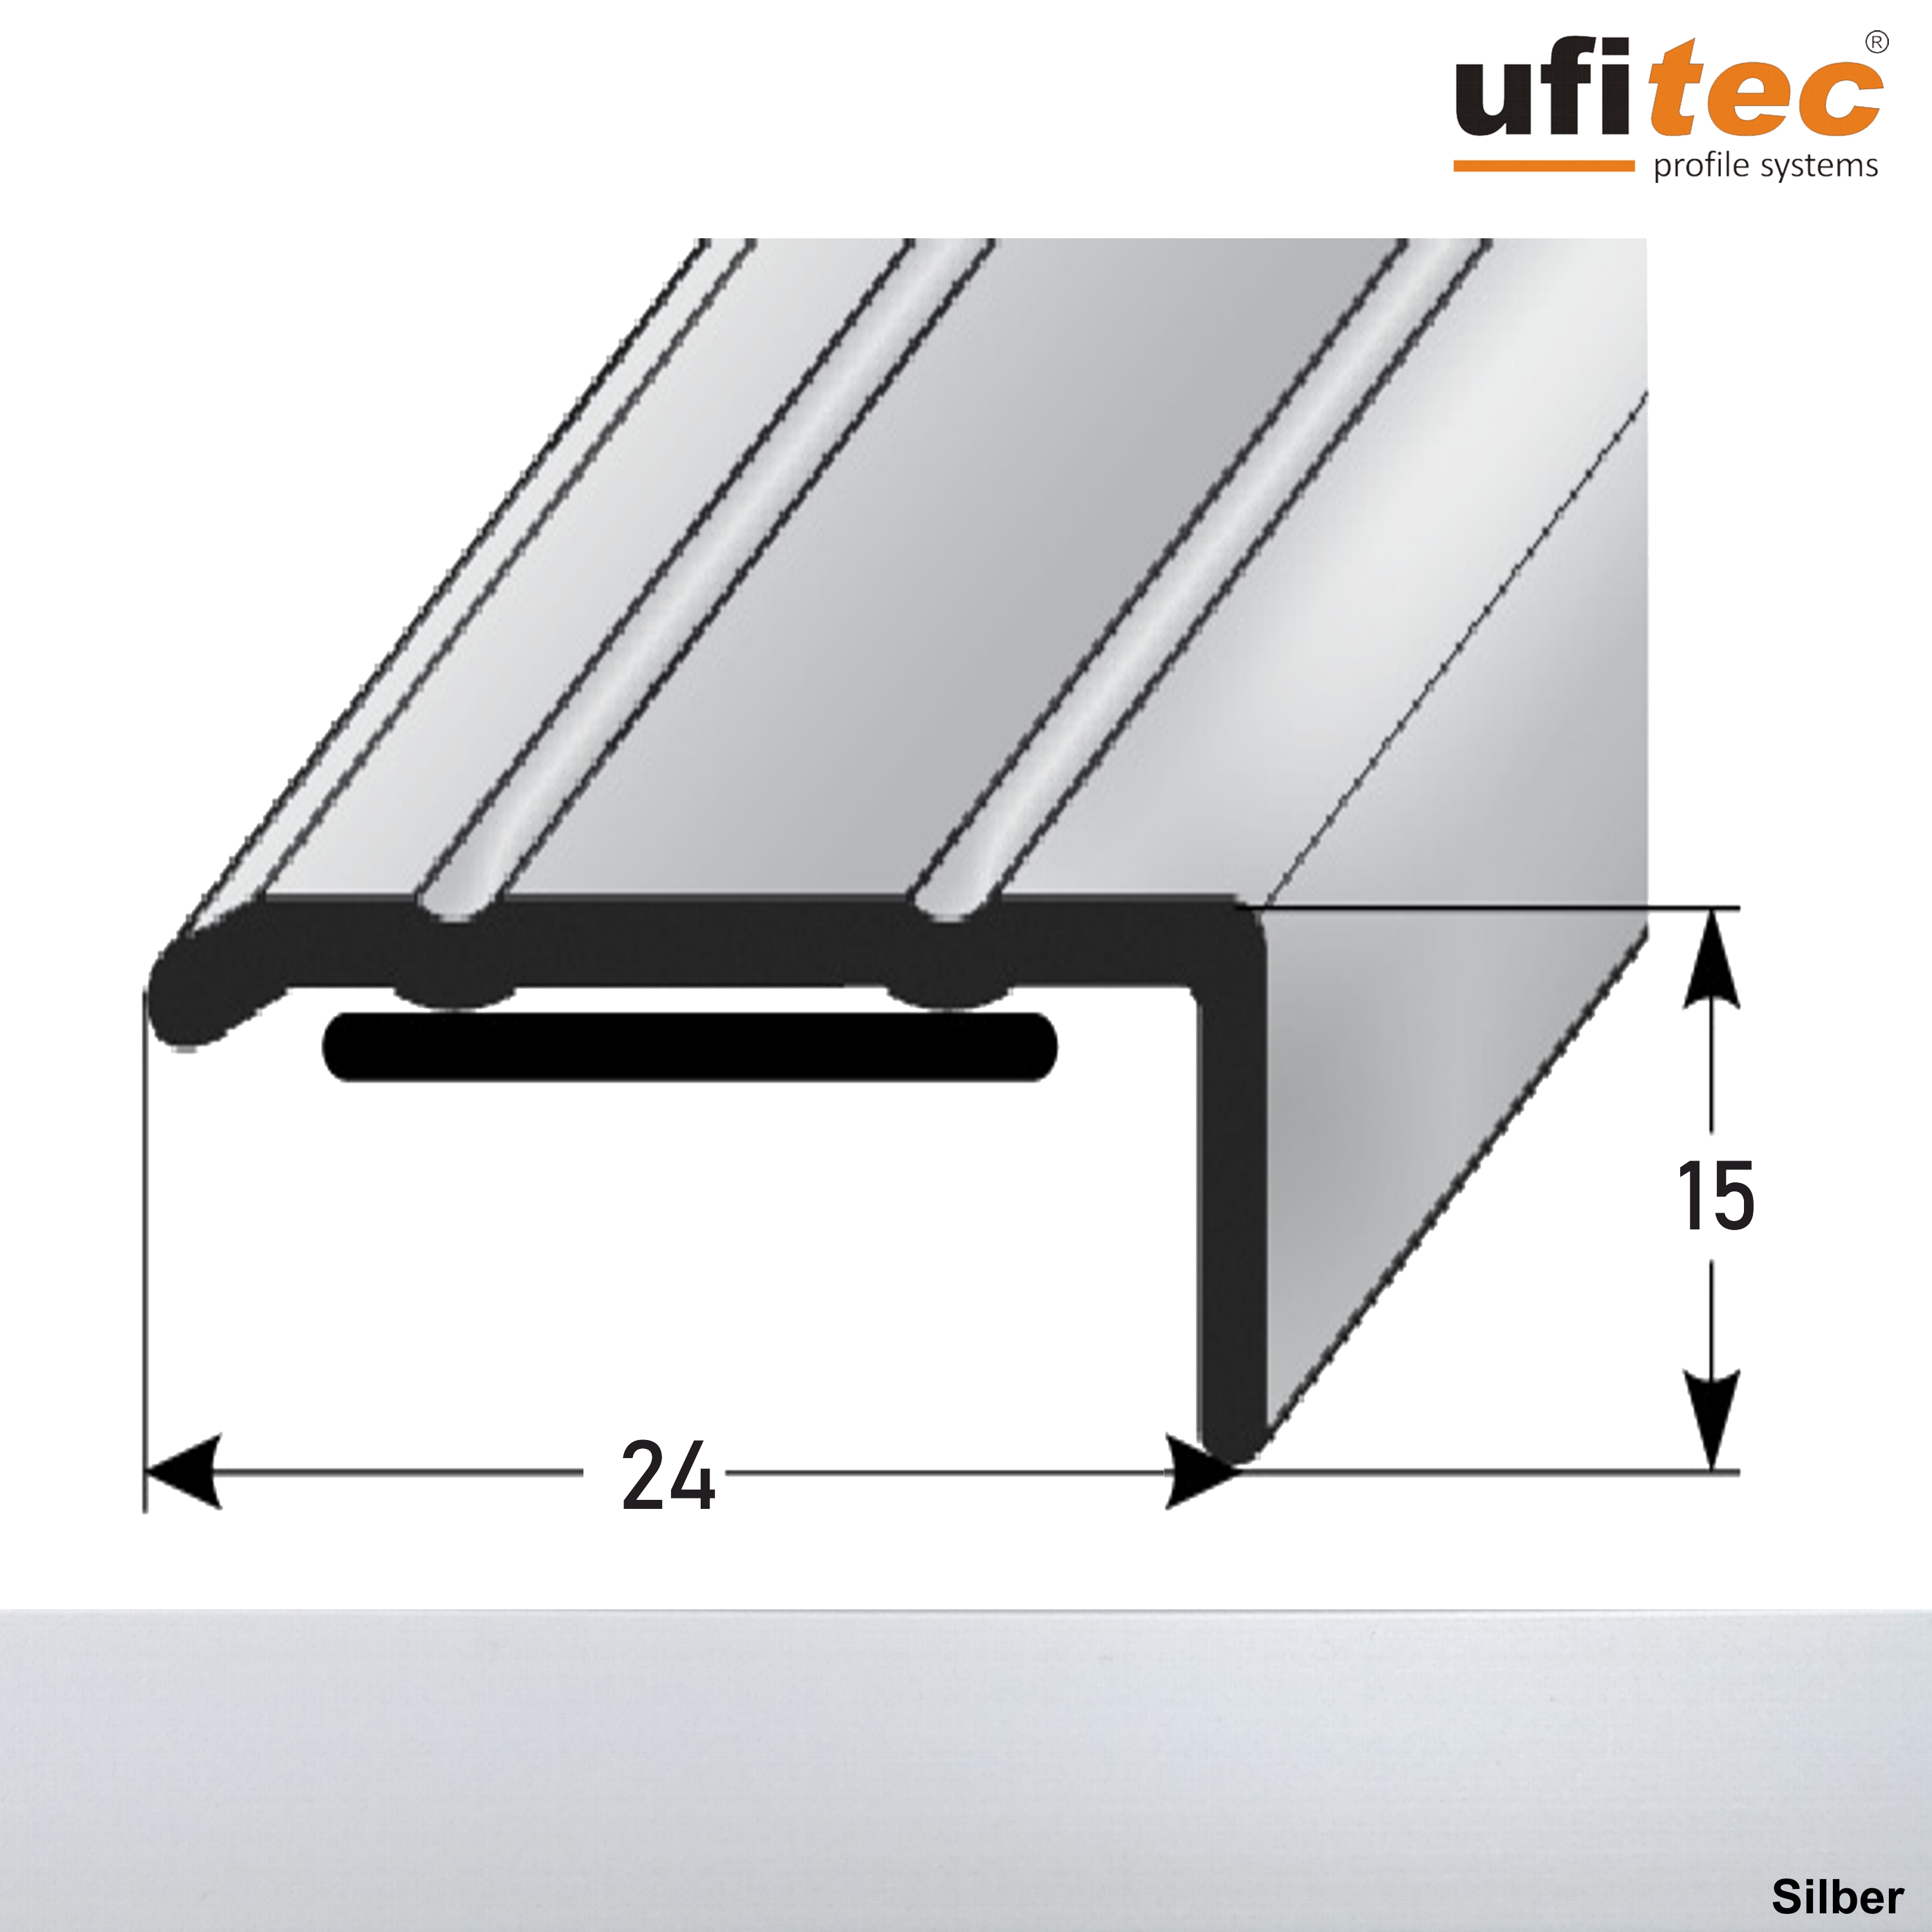 ufitec® Winkelprofil / Treppenkantenprofil - selbstklebend - 24 x 15 mm -  Alu eloxiert